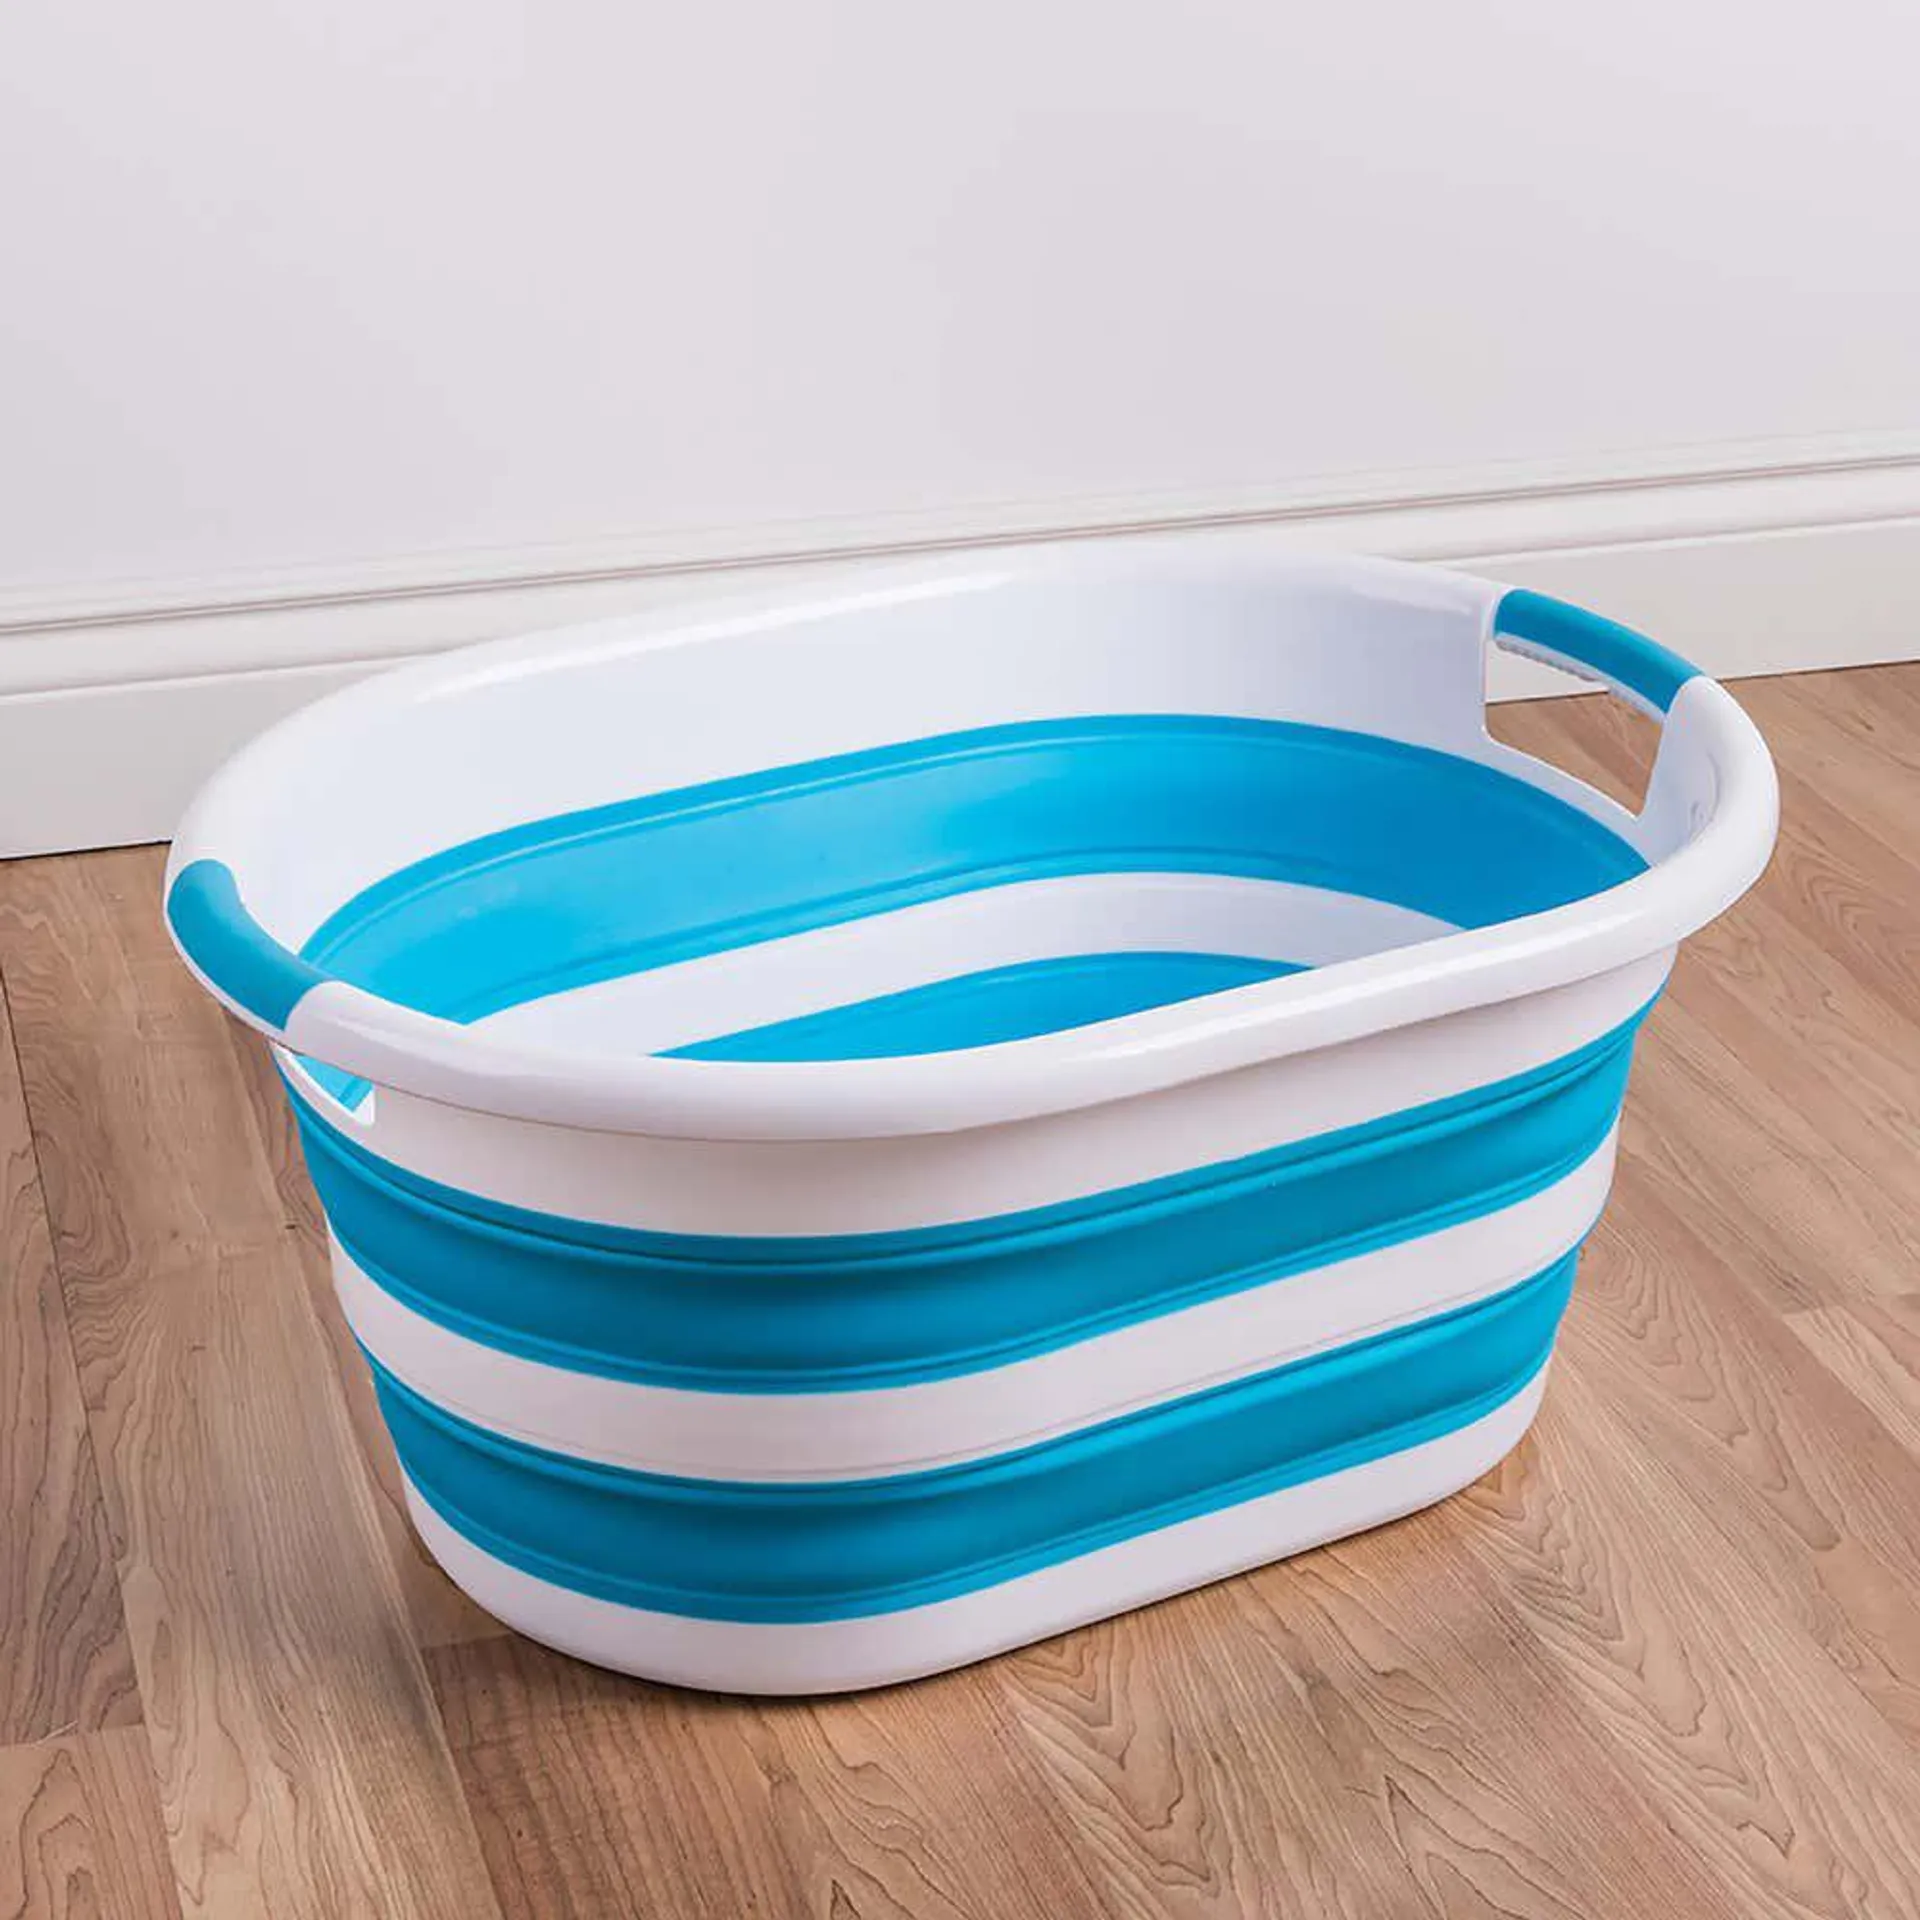 KSP Pop N Fold Space Saving Laundry Basket (White/Blue)